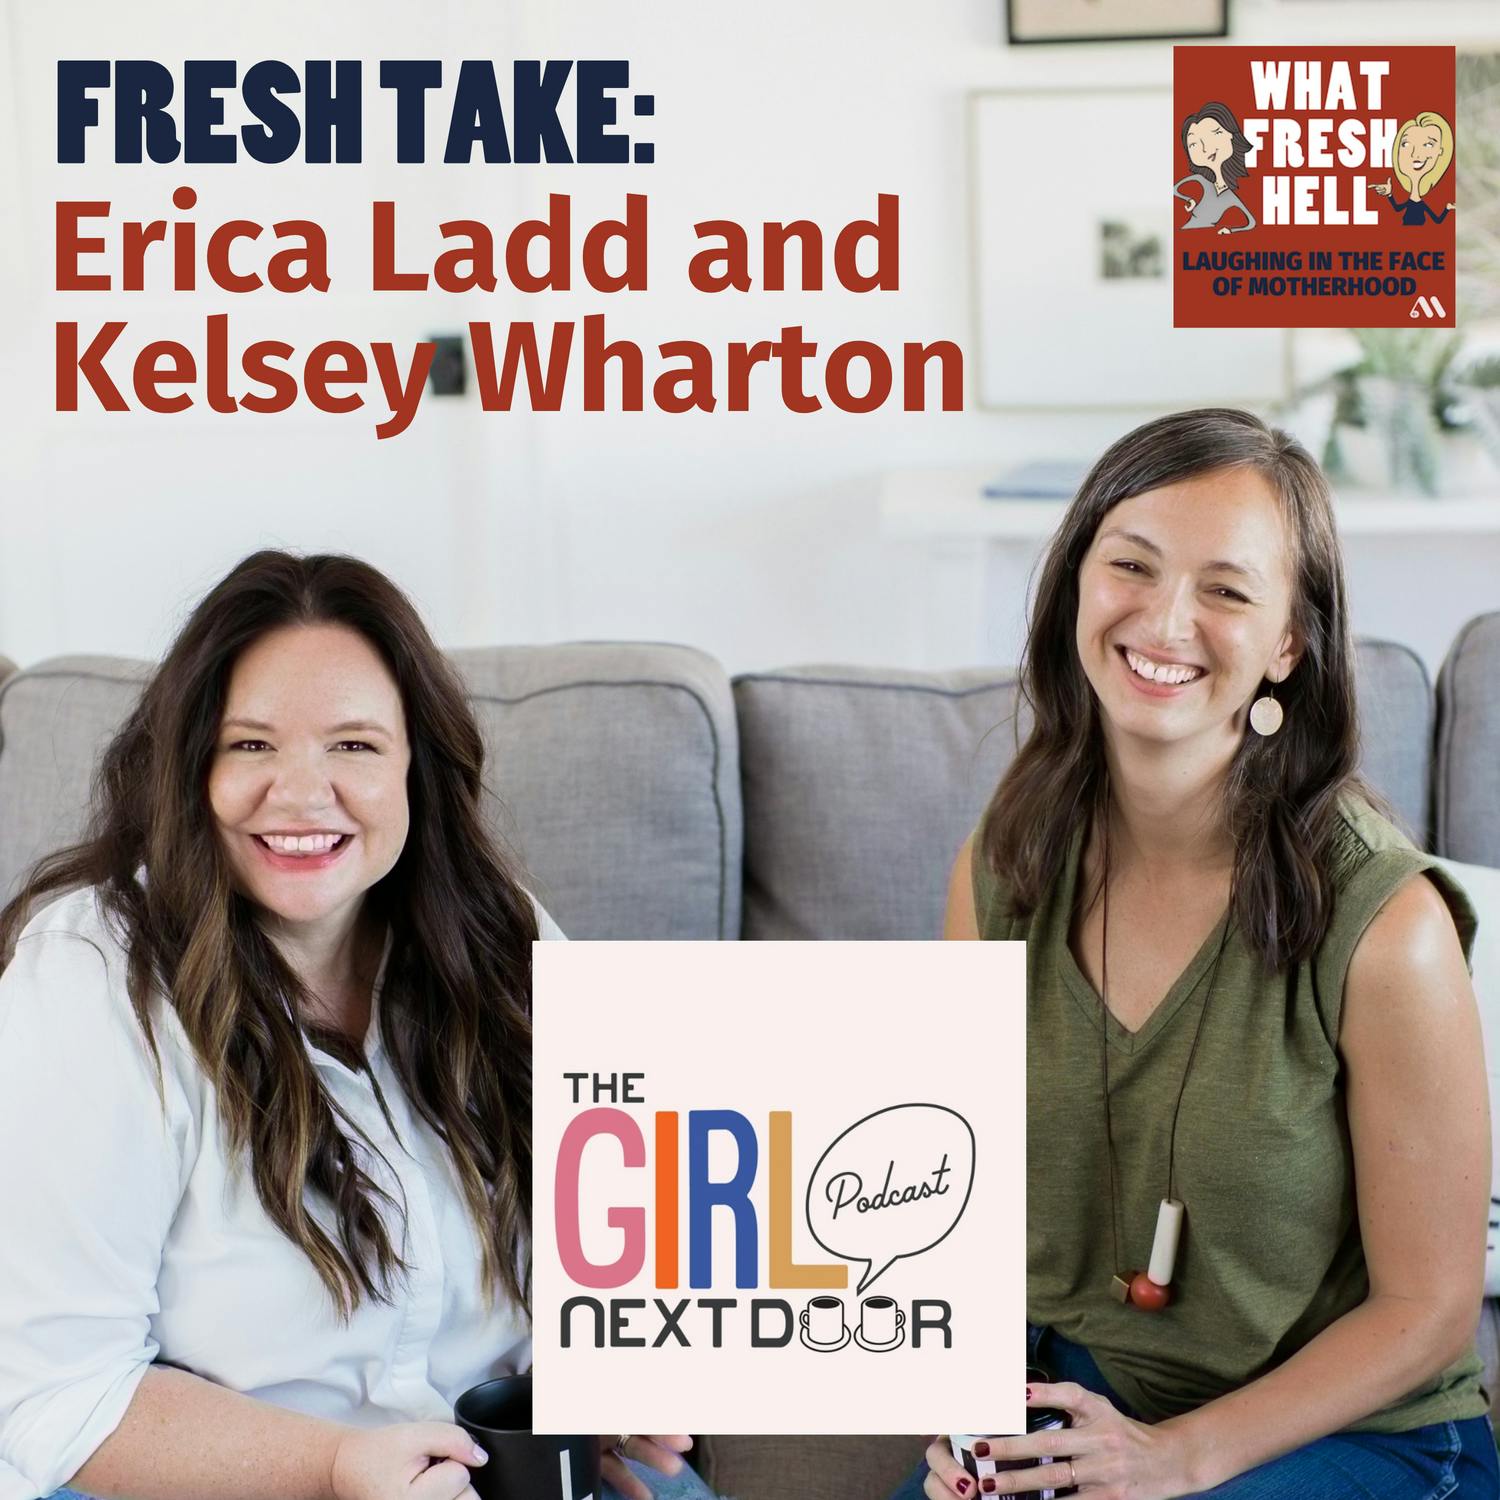 Fresh Take: ”The Girl Next Door Podcast” on Setting Boundaries